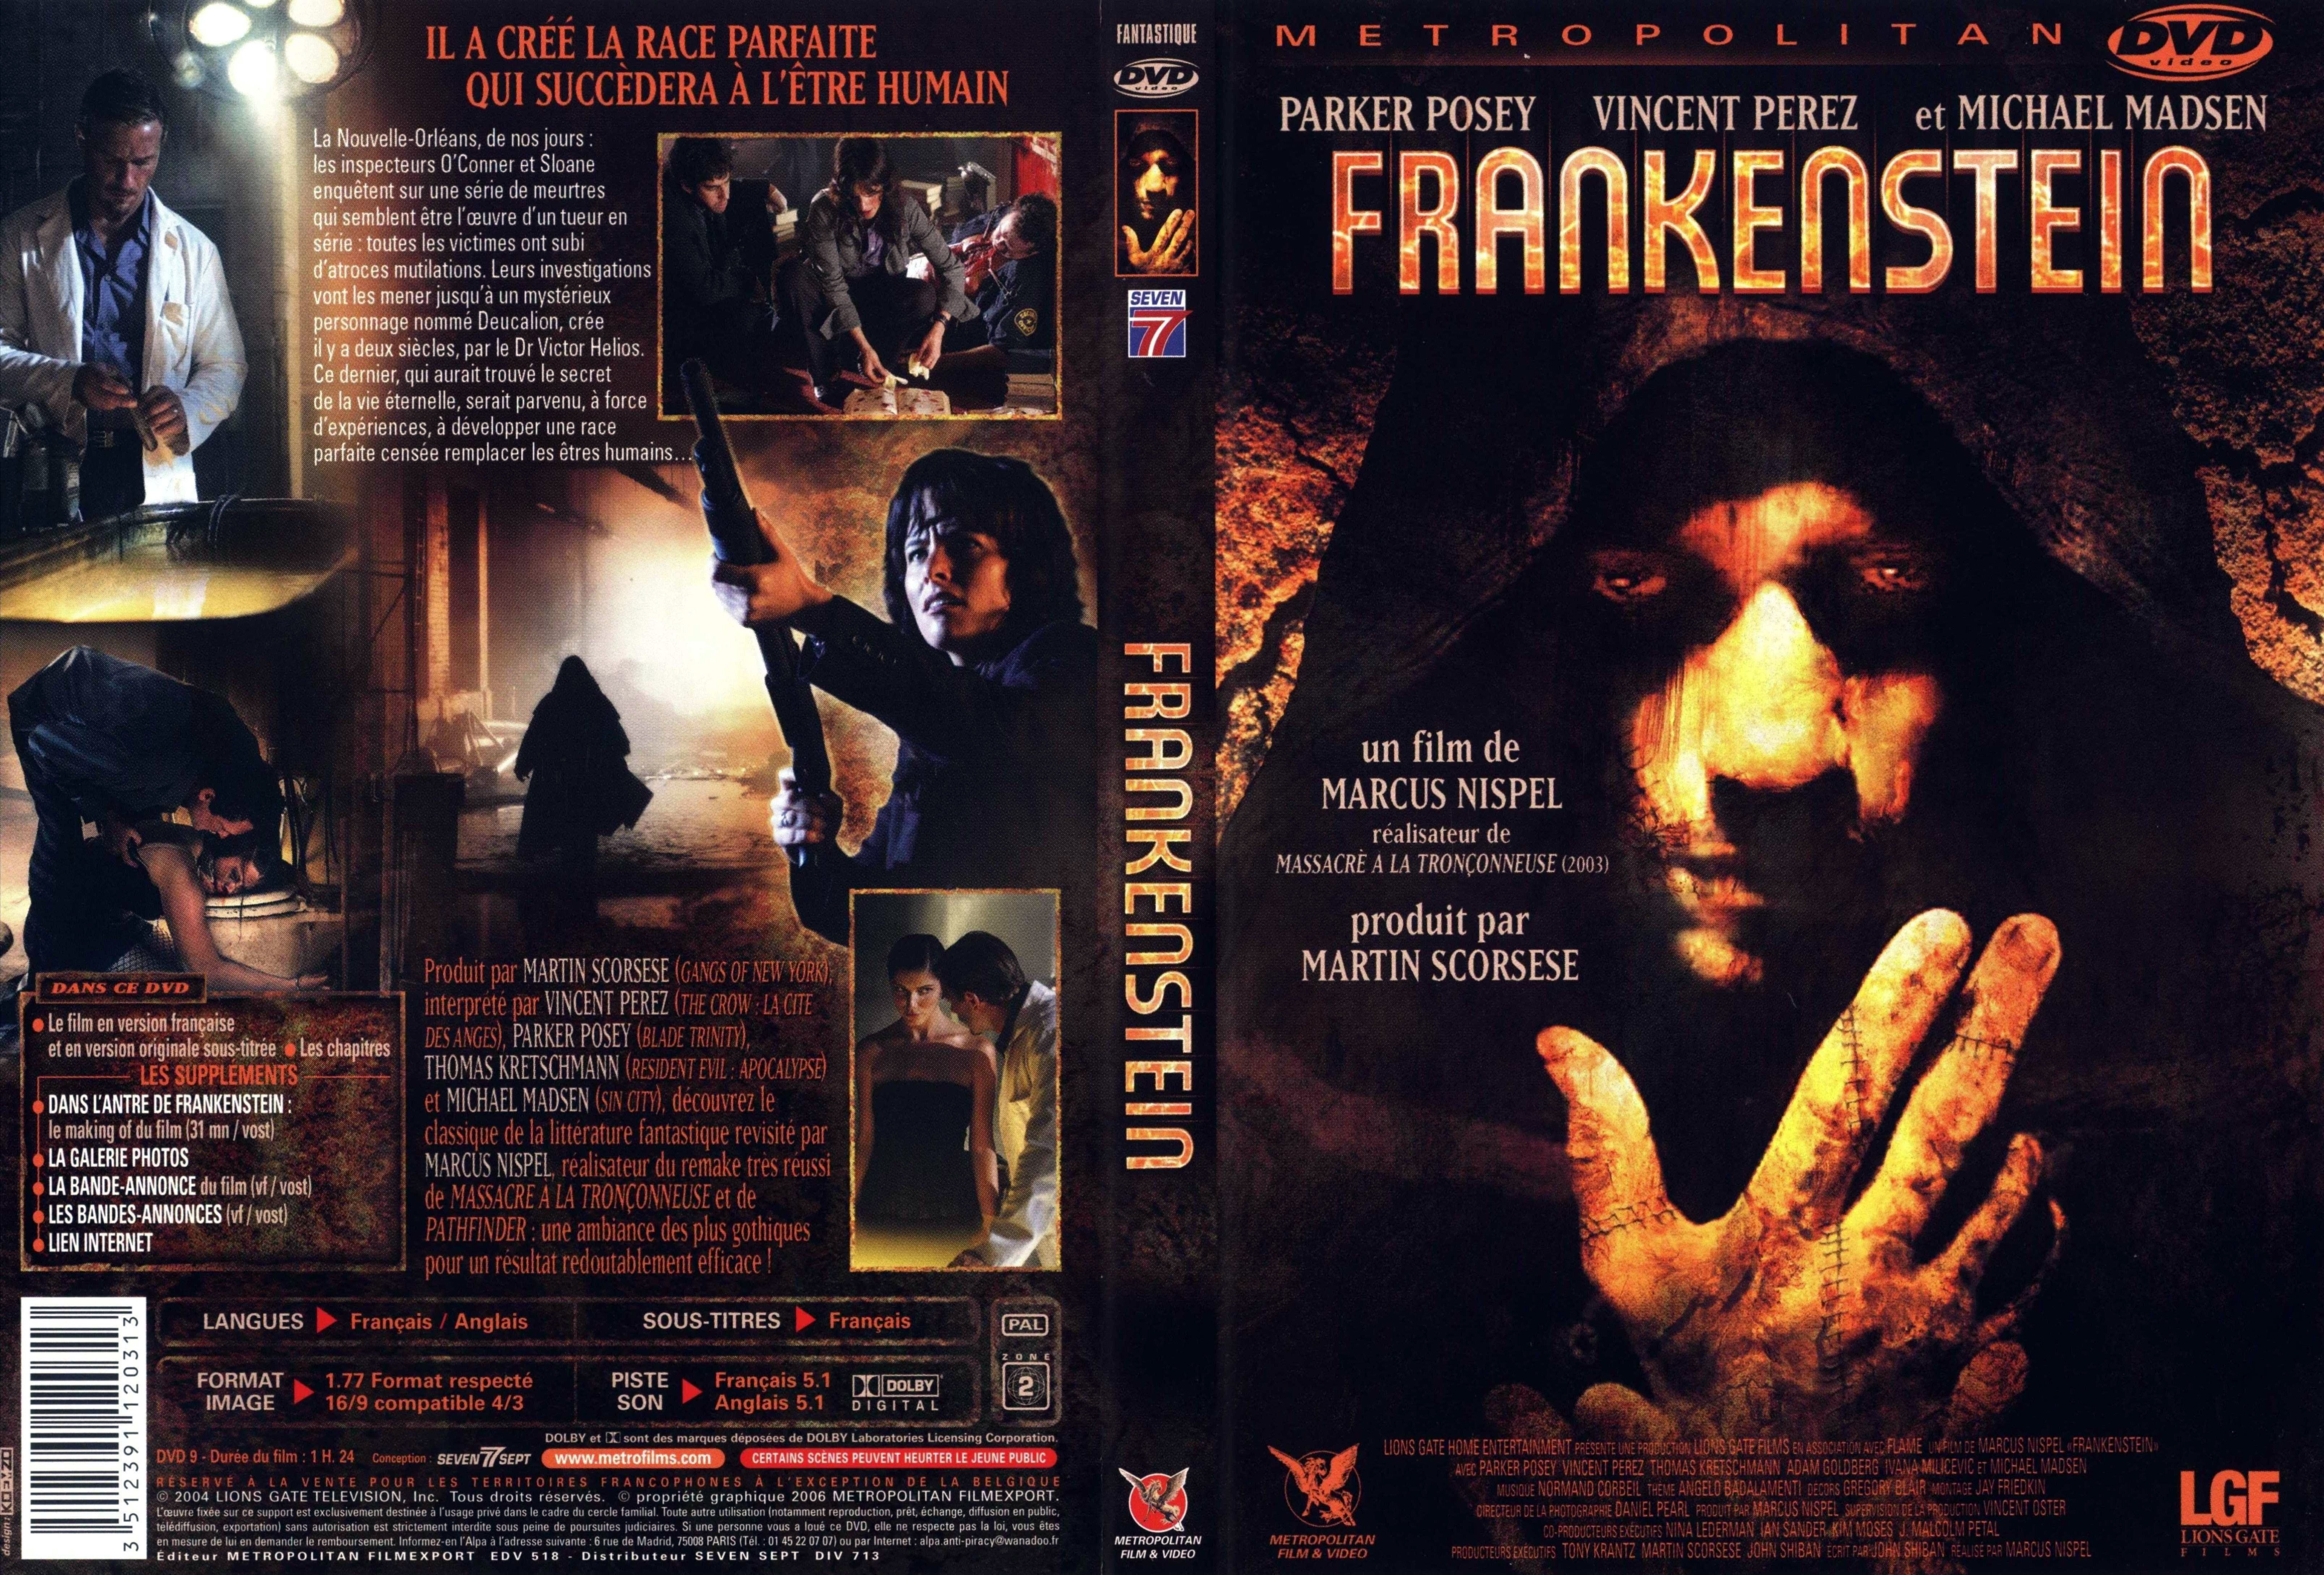 Jaquette DVD Frankenstein (Vincent Perez)